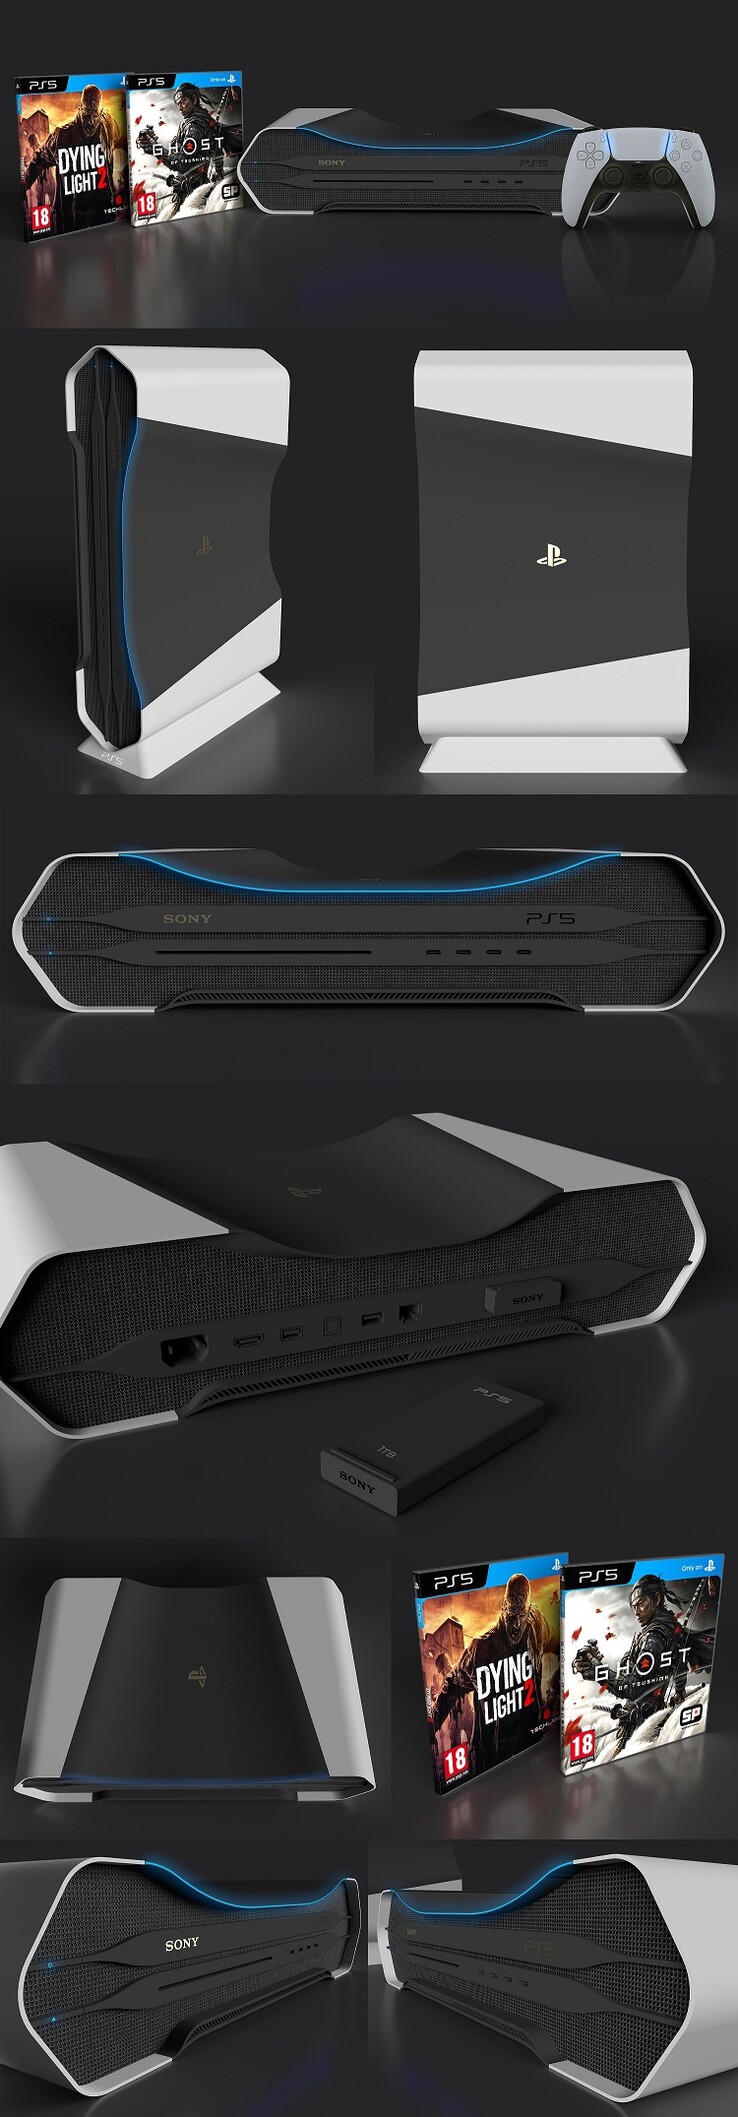 Fan-made PS5 concept designs. (Image source: Reddit - u/ruddi2020)